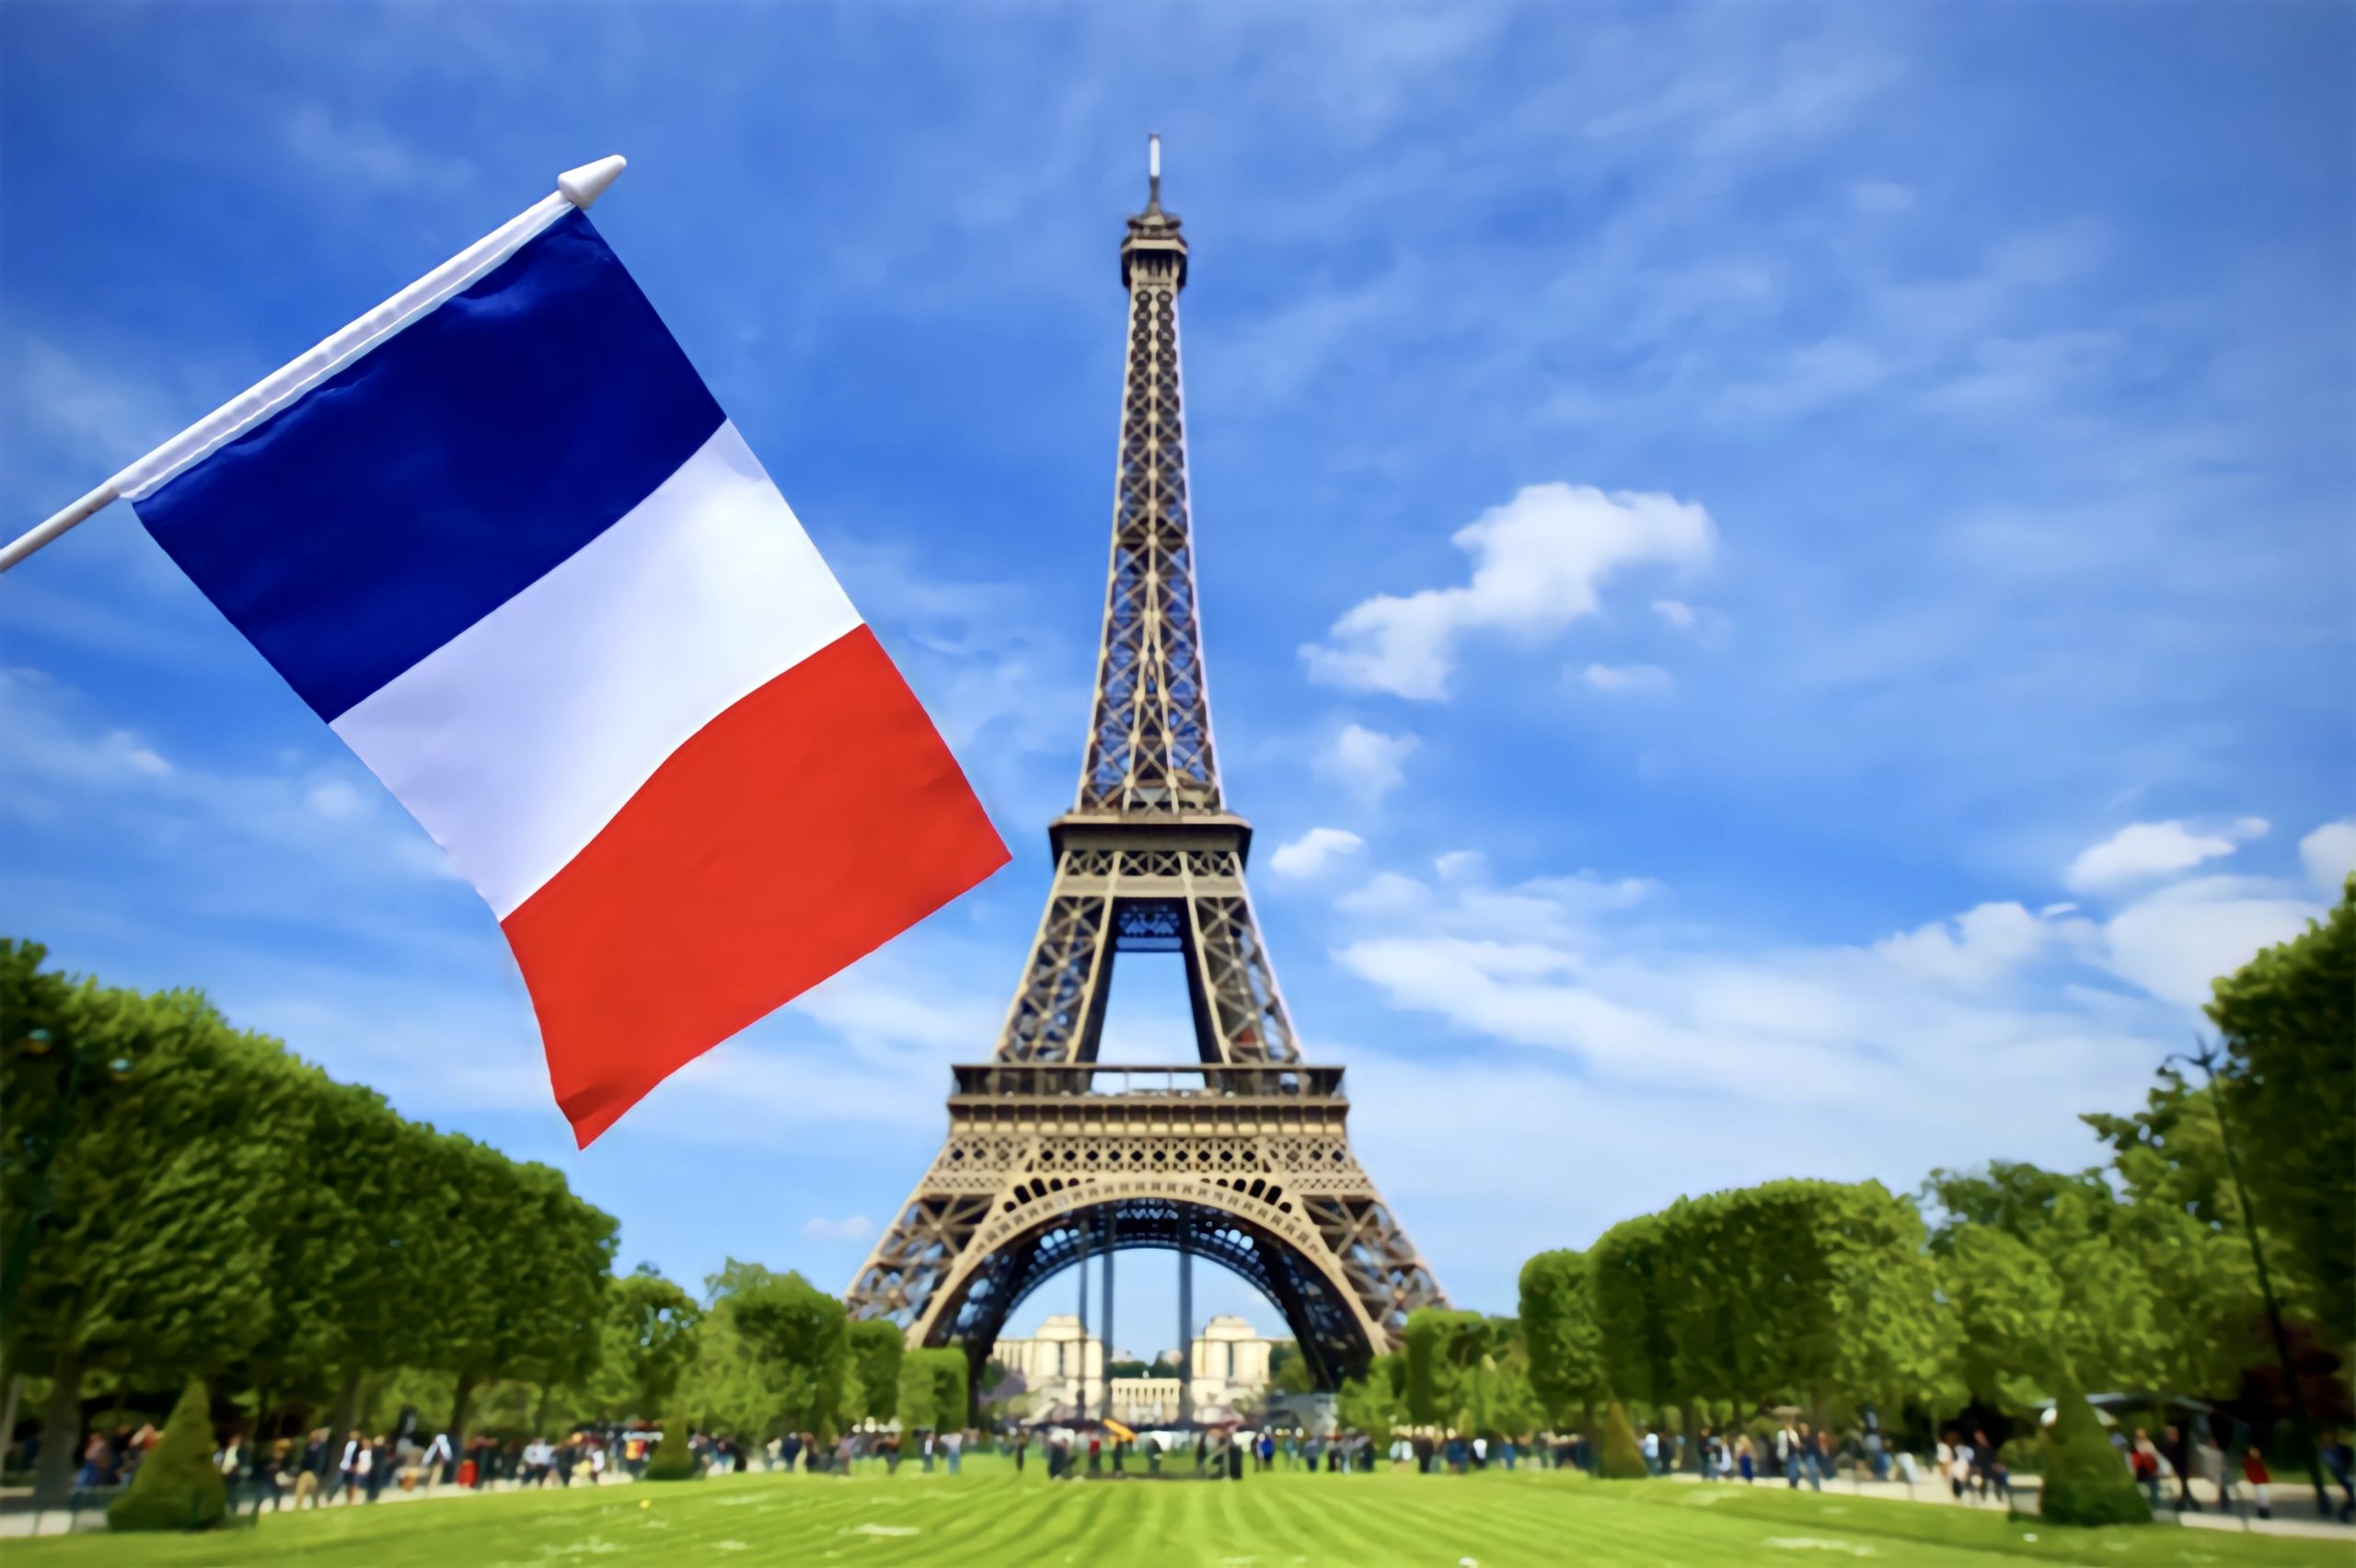 A symbol of paris. Эйфель башня с флагом. Флаг Парижа Франции. Эльфиева башня с флагом Франции. Символы Парижа и Франции.